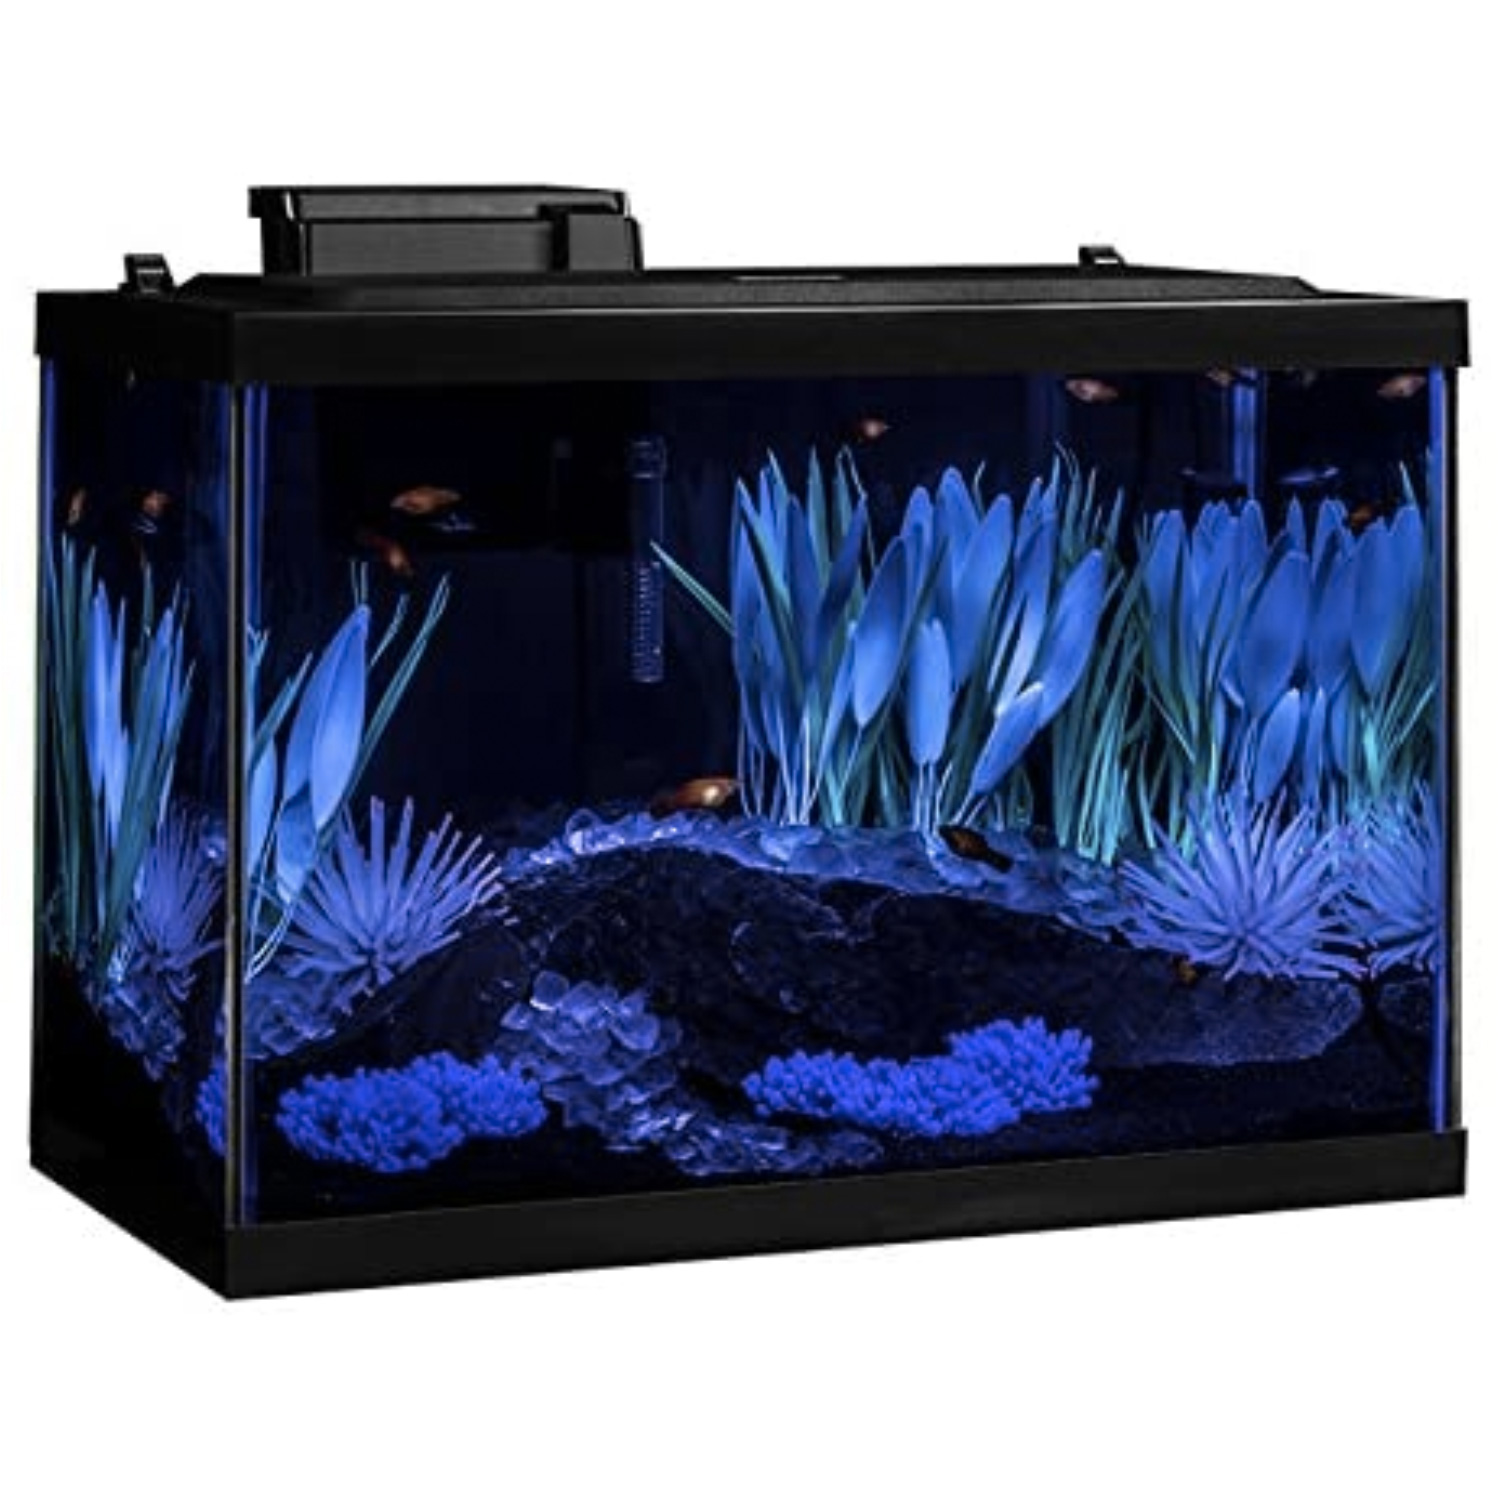 20 Gallon Aquarium Fish Tank Complete Kit with Heater Filter LED Lighting Plants 